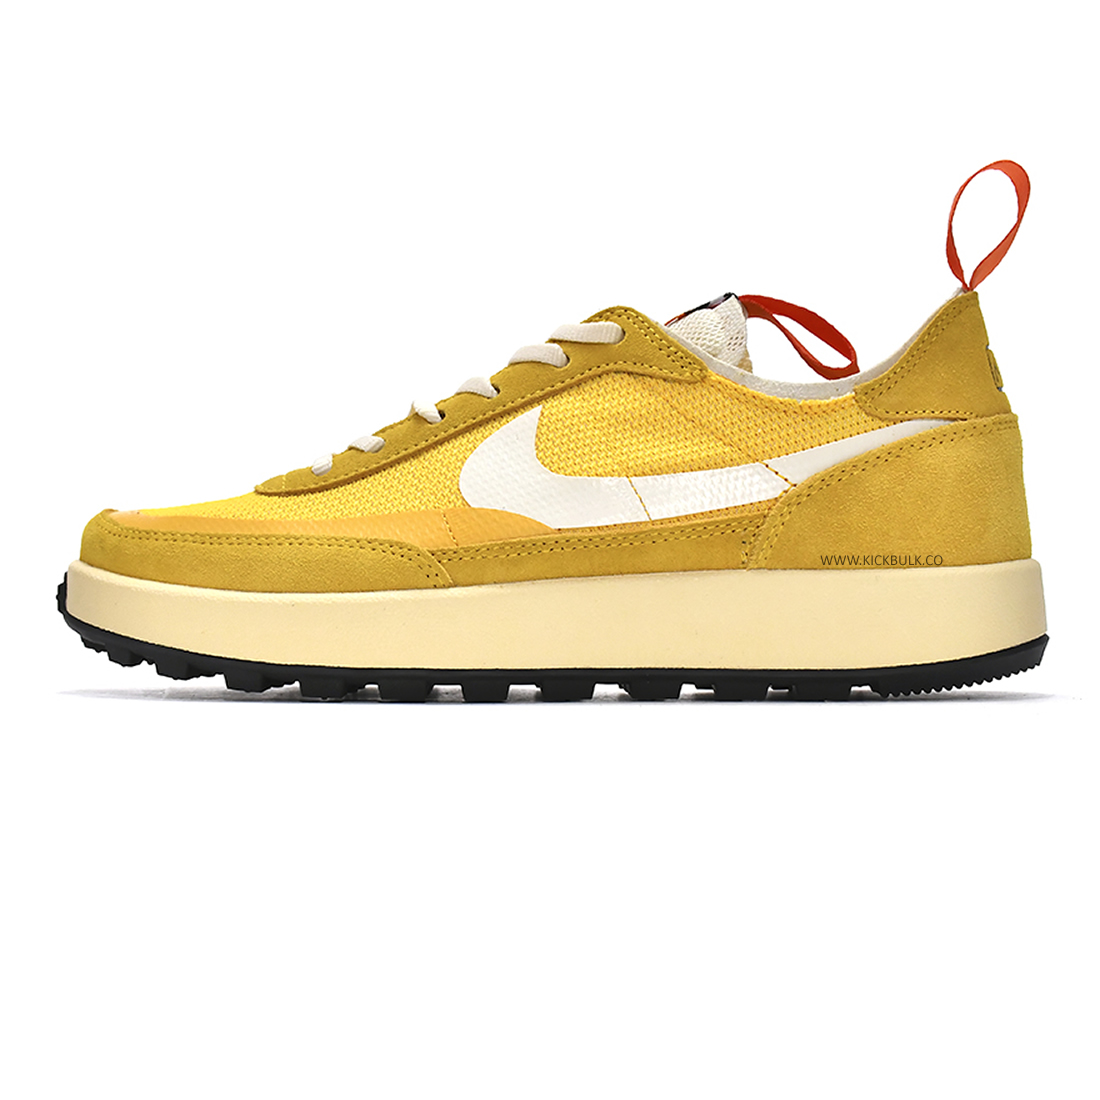 Tom Sachs Nikecraft General Purpose Shoe Yellow Wmns Da6672 700 1 - kickbulk.org